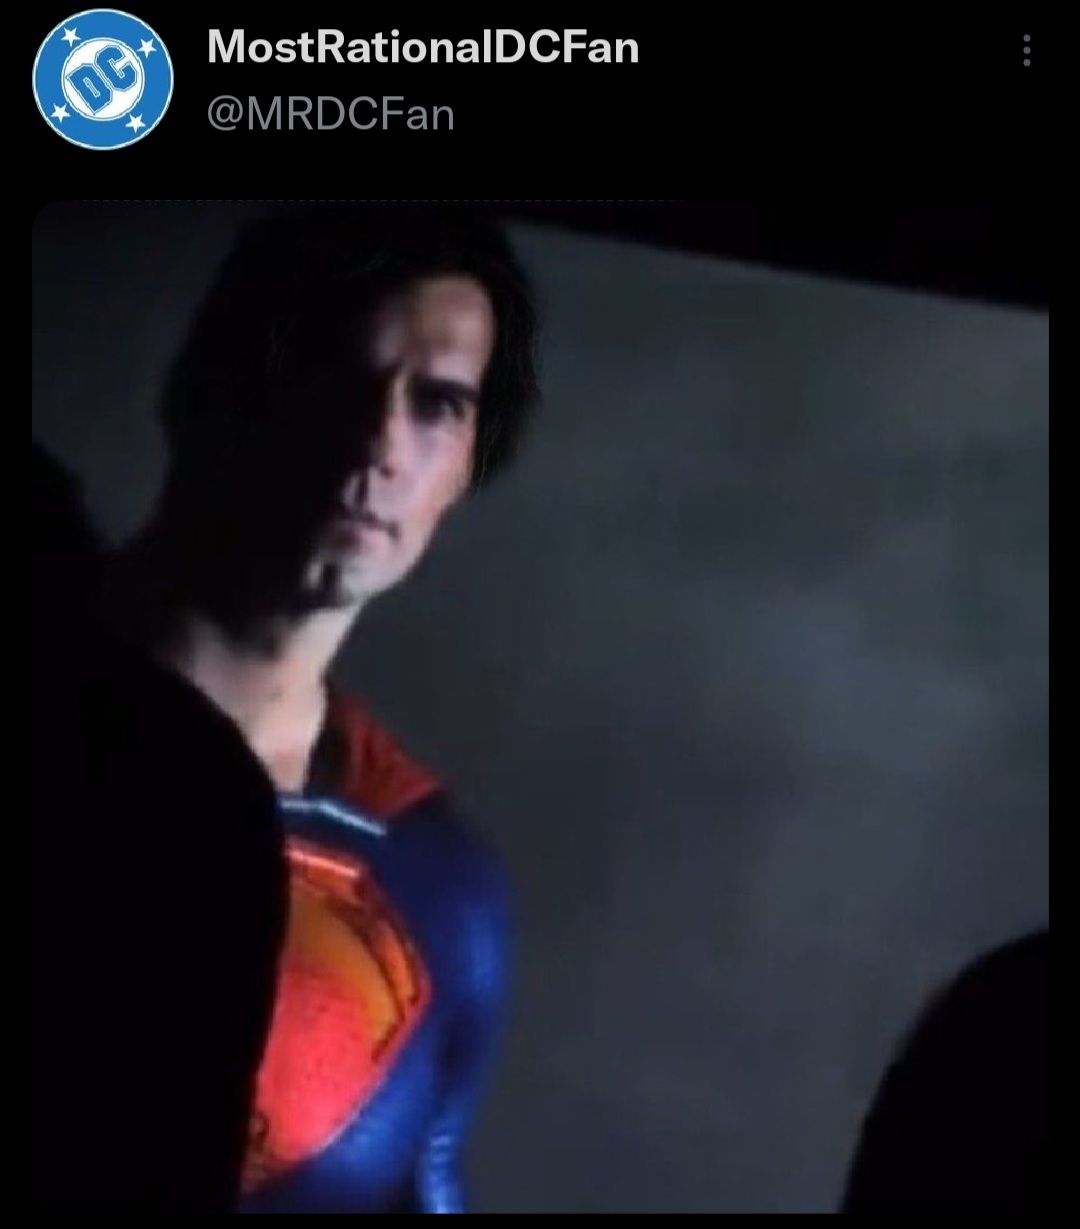 Black Adam : post credit scene leaked - Superman is back ! - Vidéo